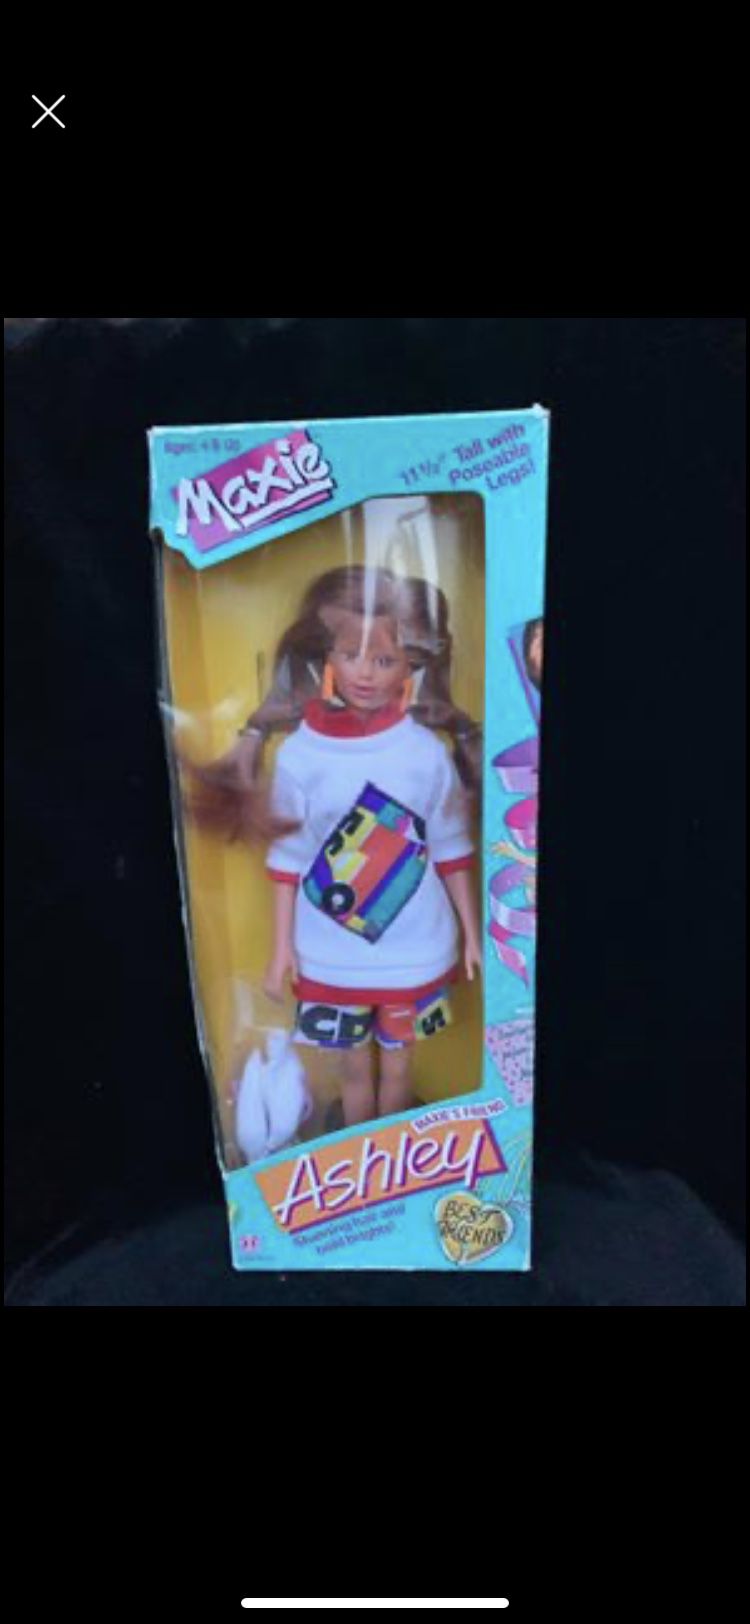 Vintage stills in box. "Maxie's friend of Ashley" Barbie. 1987